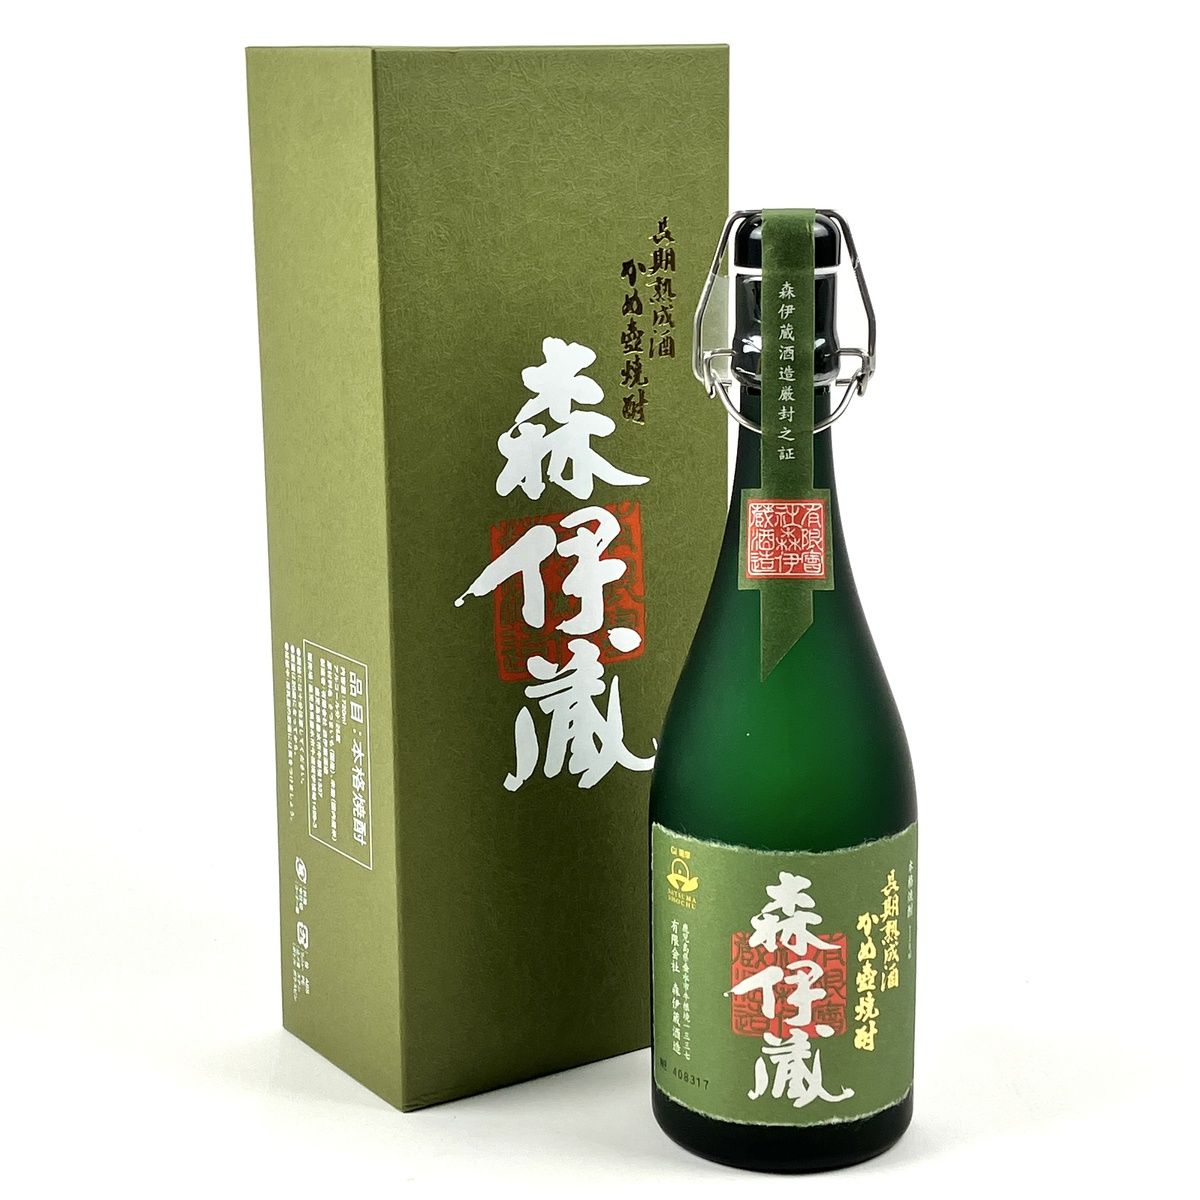 豪奢な 森伊蔵 古酒 ytvjoaf-makk 焼酎 - karsil.com.pe